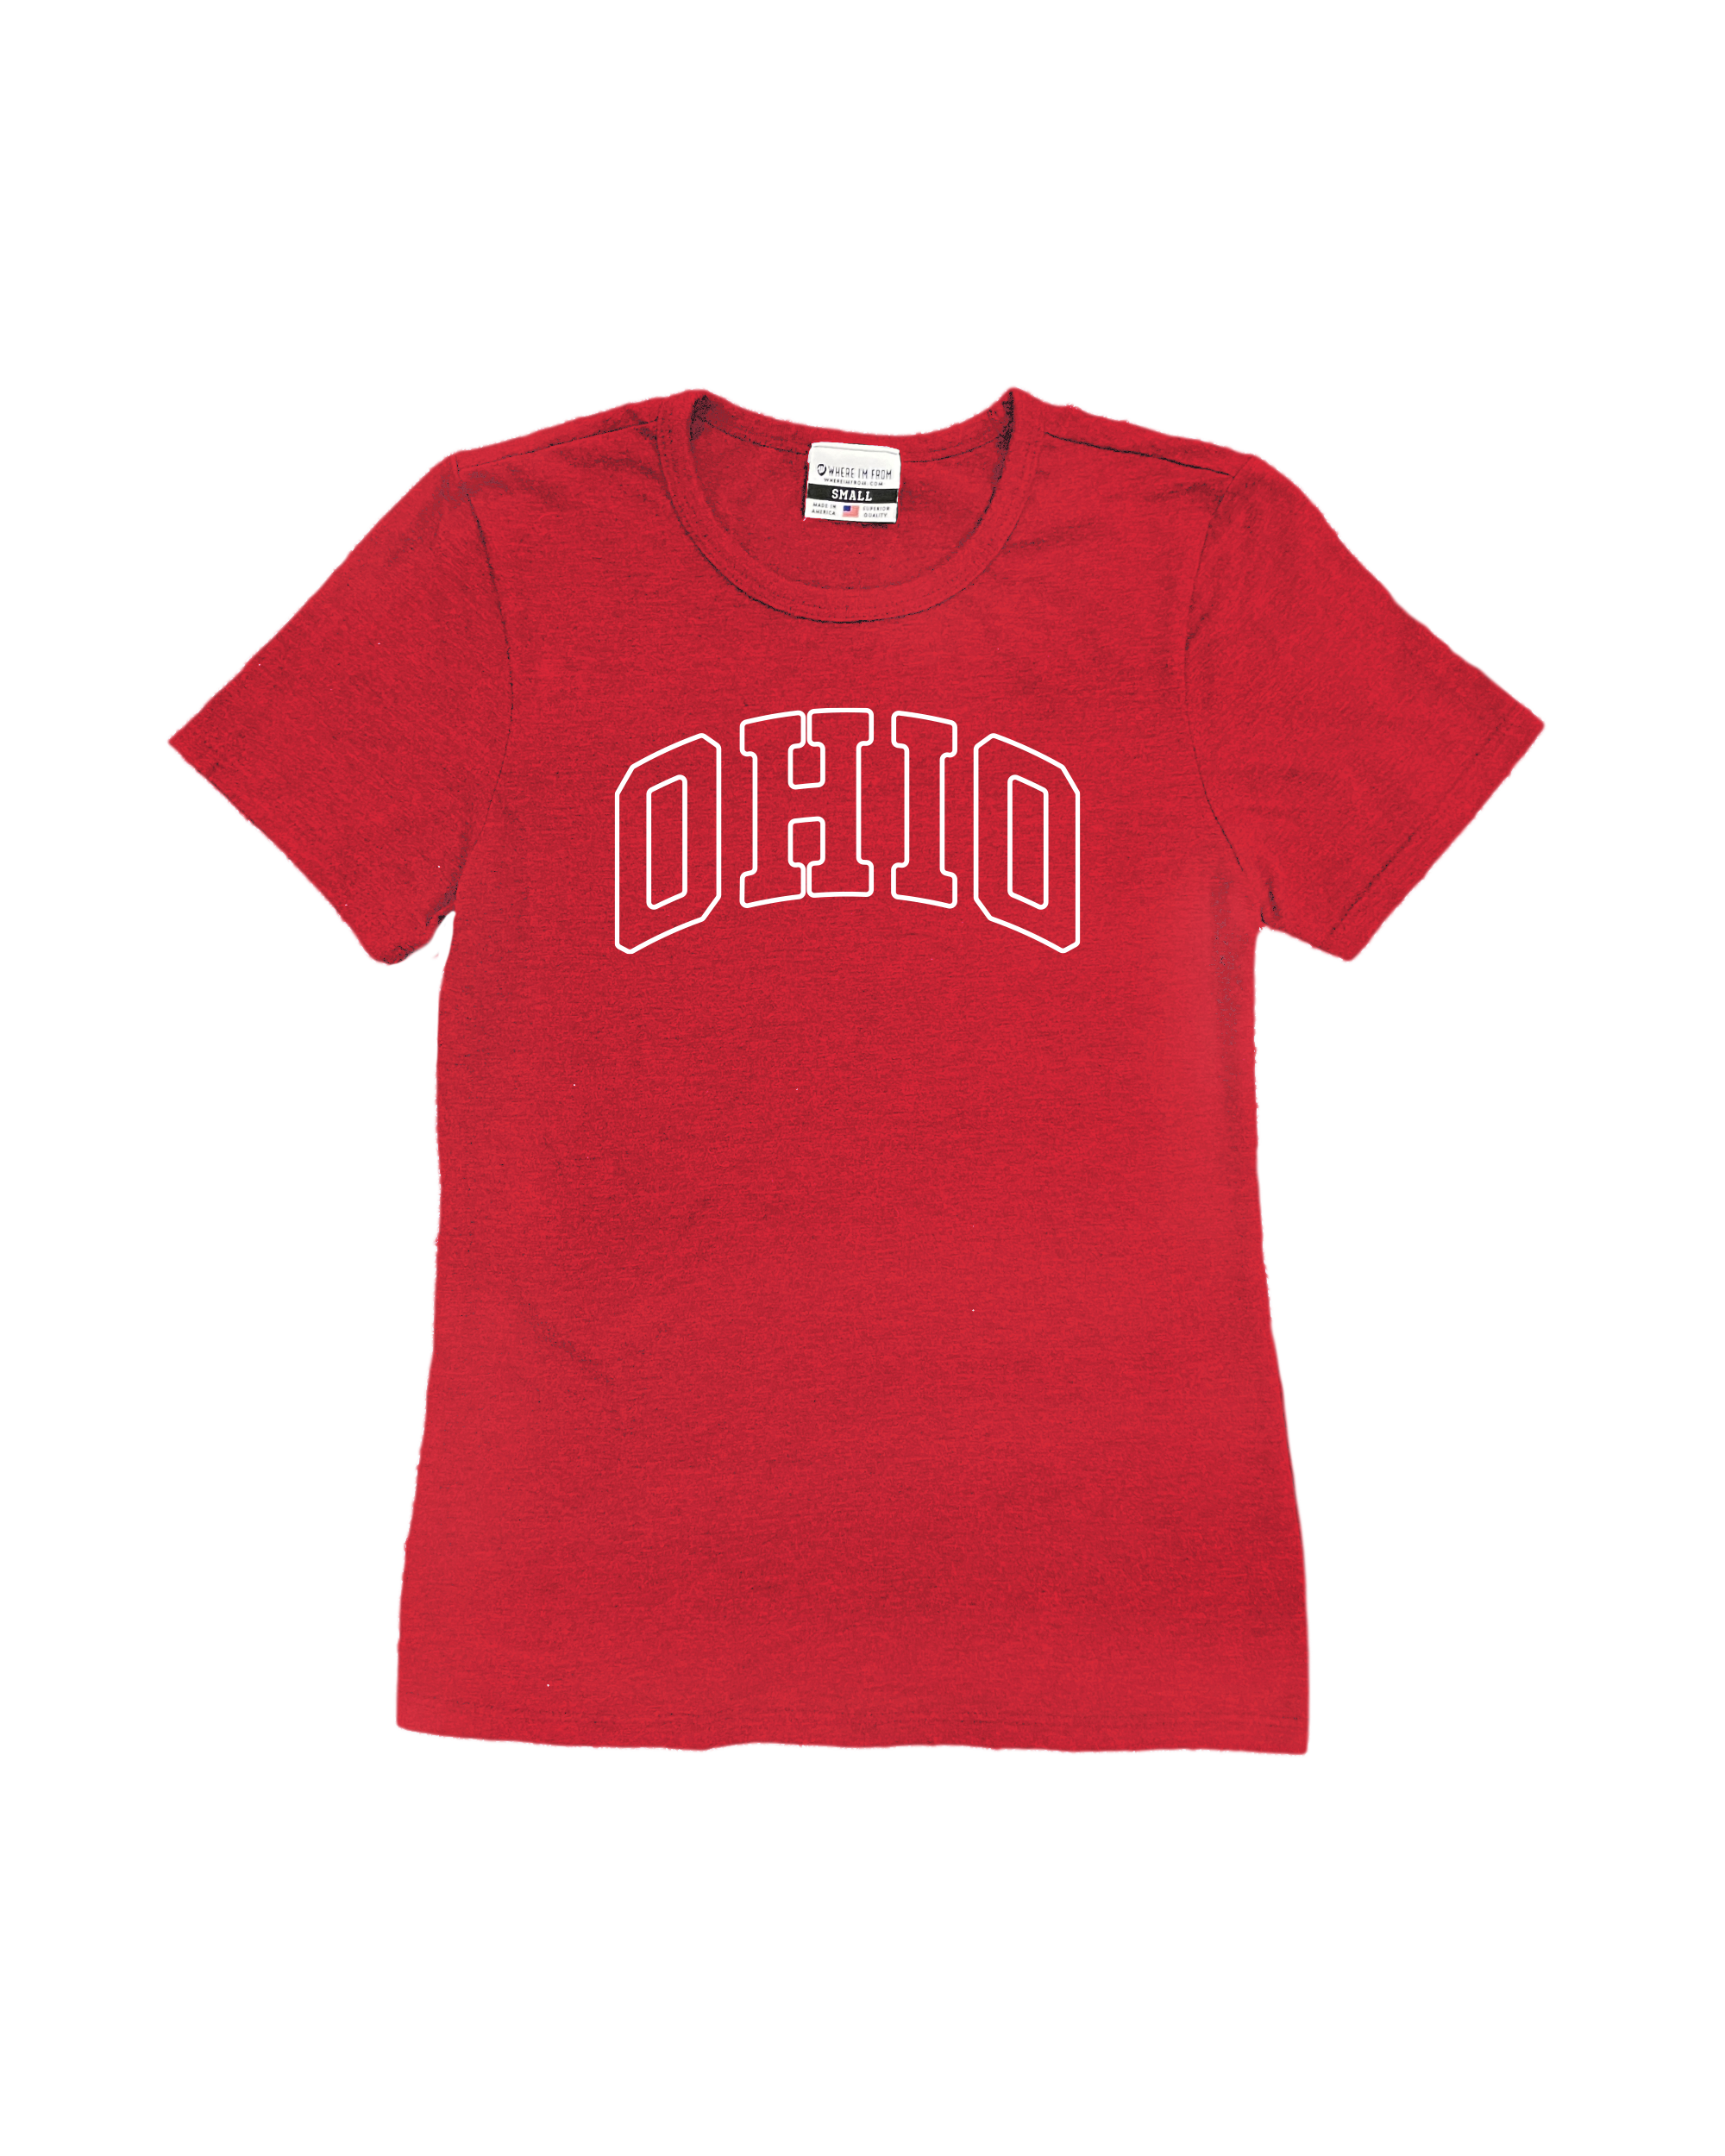 Ohio Outline Women’s T-shirt